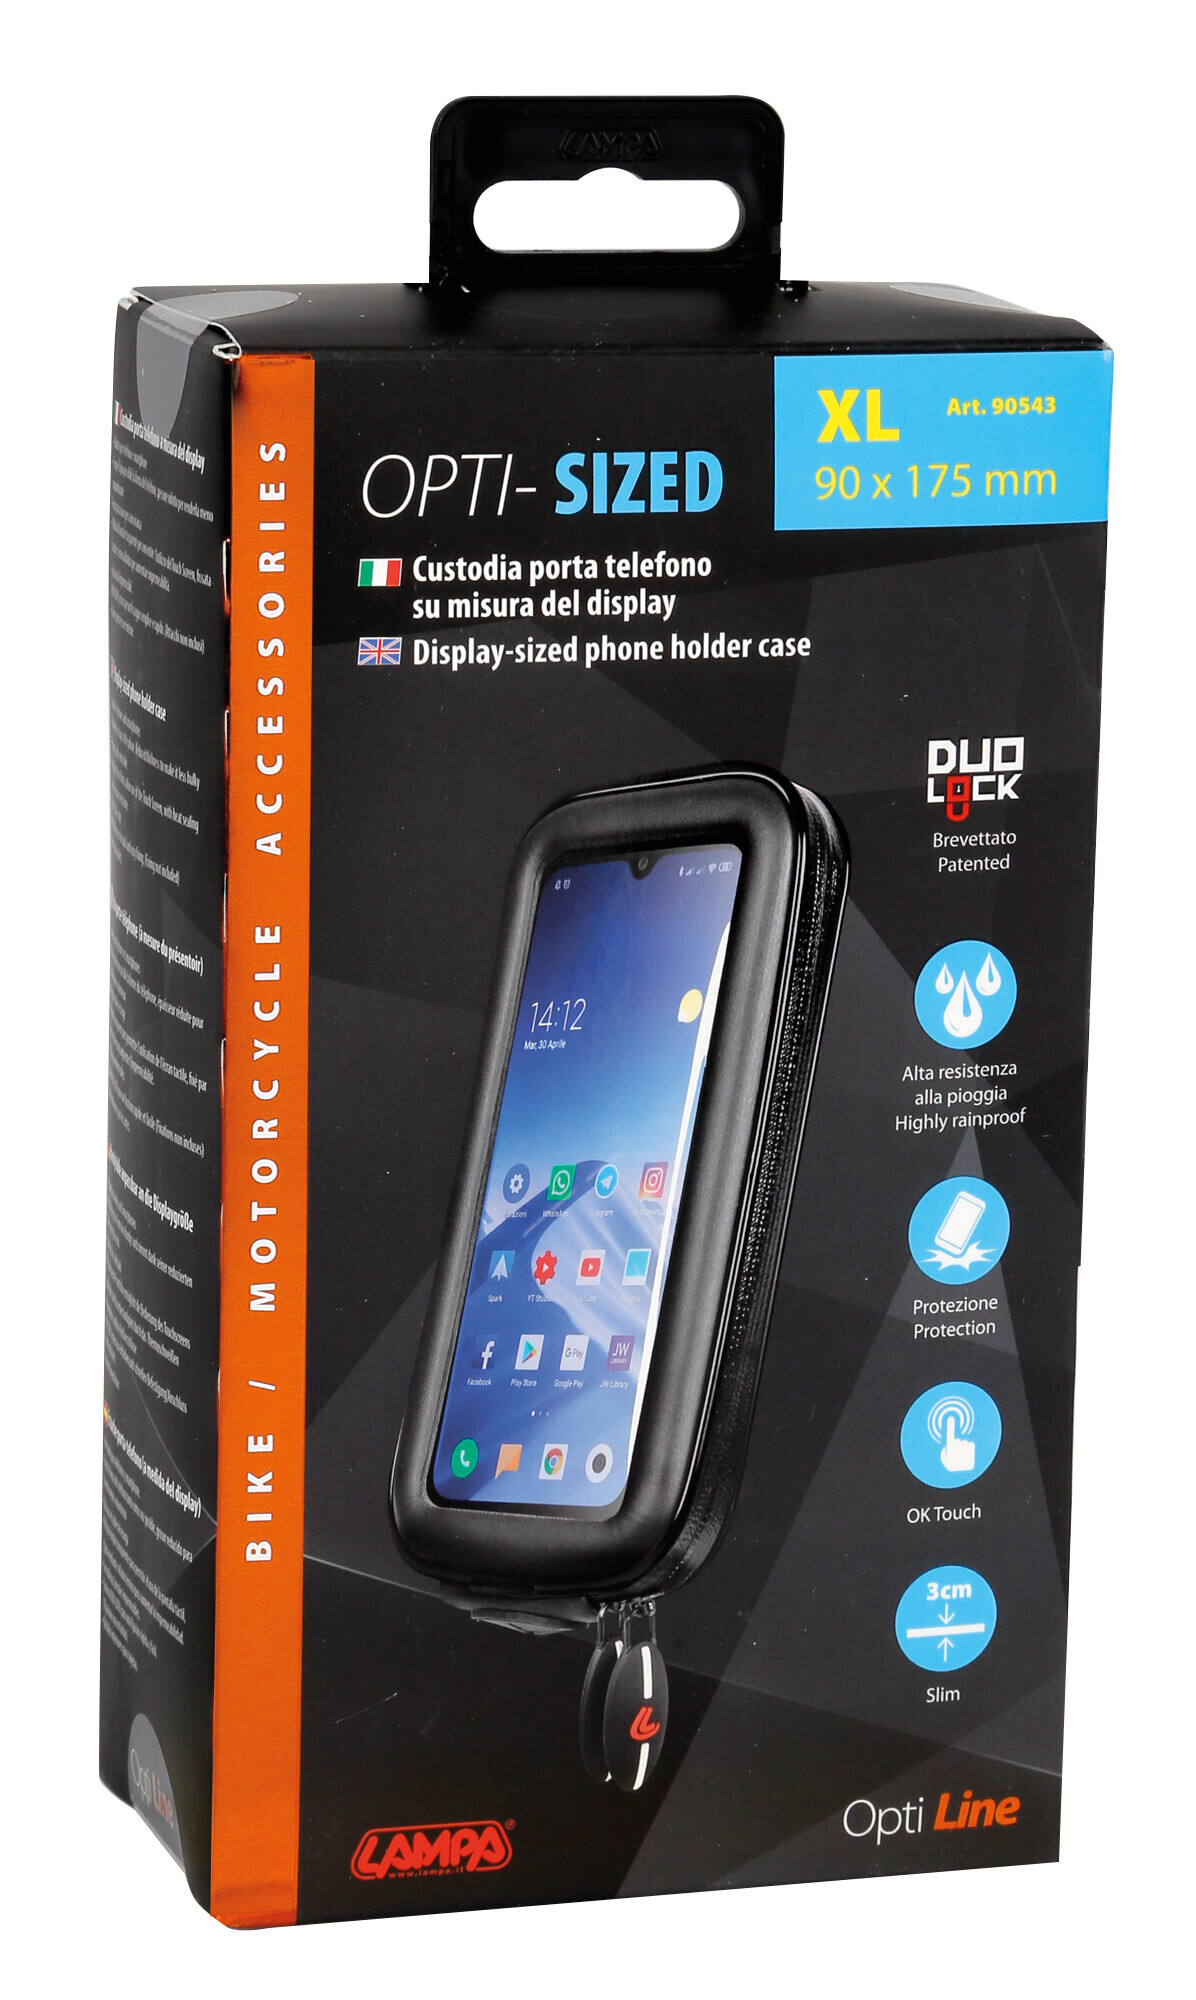 Carcasa universala Opti Sized pentru suporti telefon mobil Opti Line - XL - 90x175mm Garage AutoRide